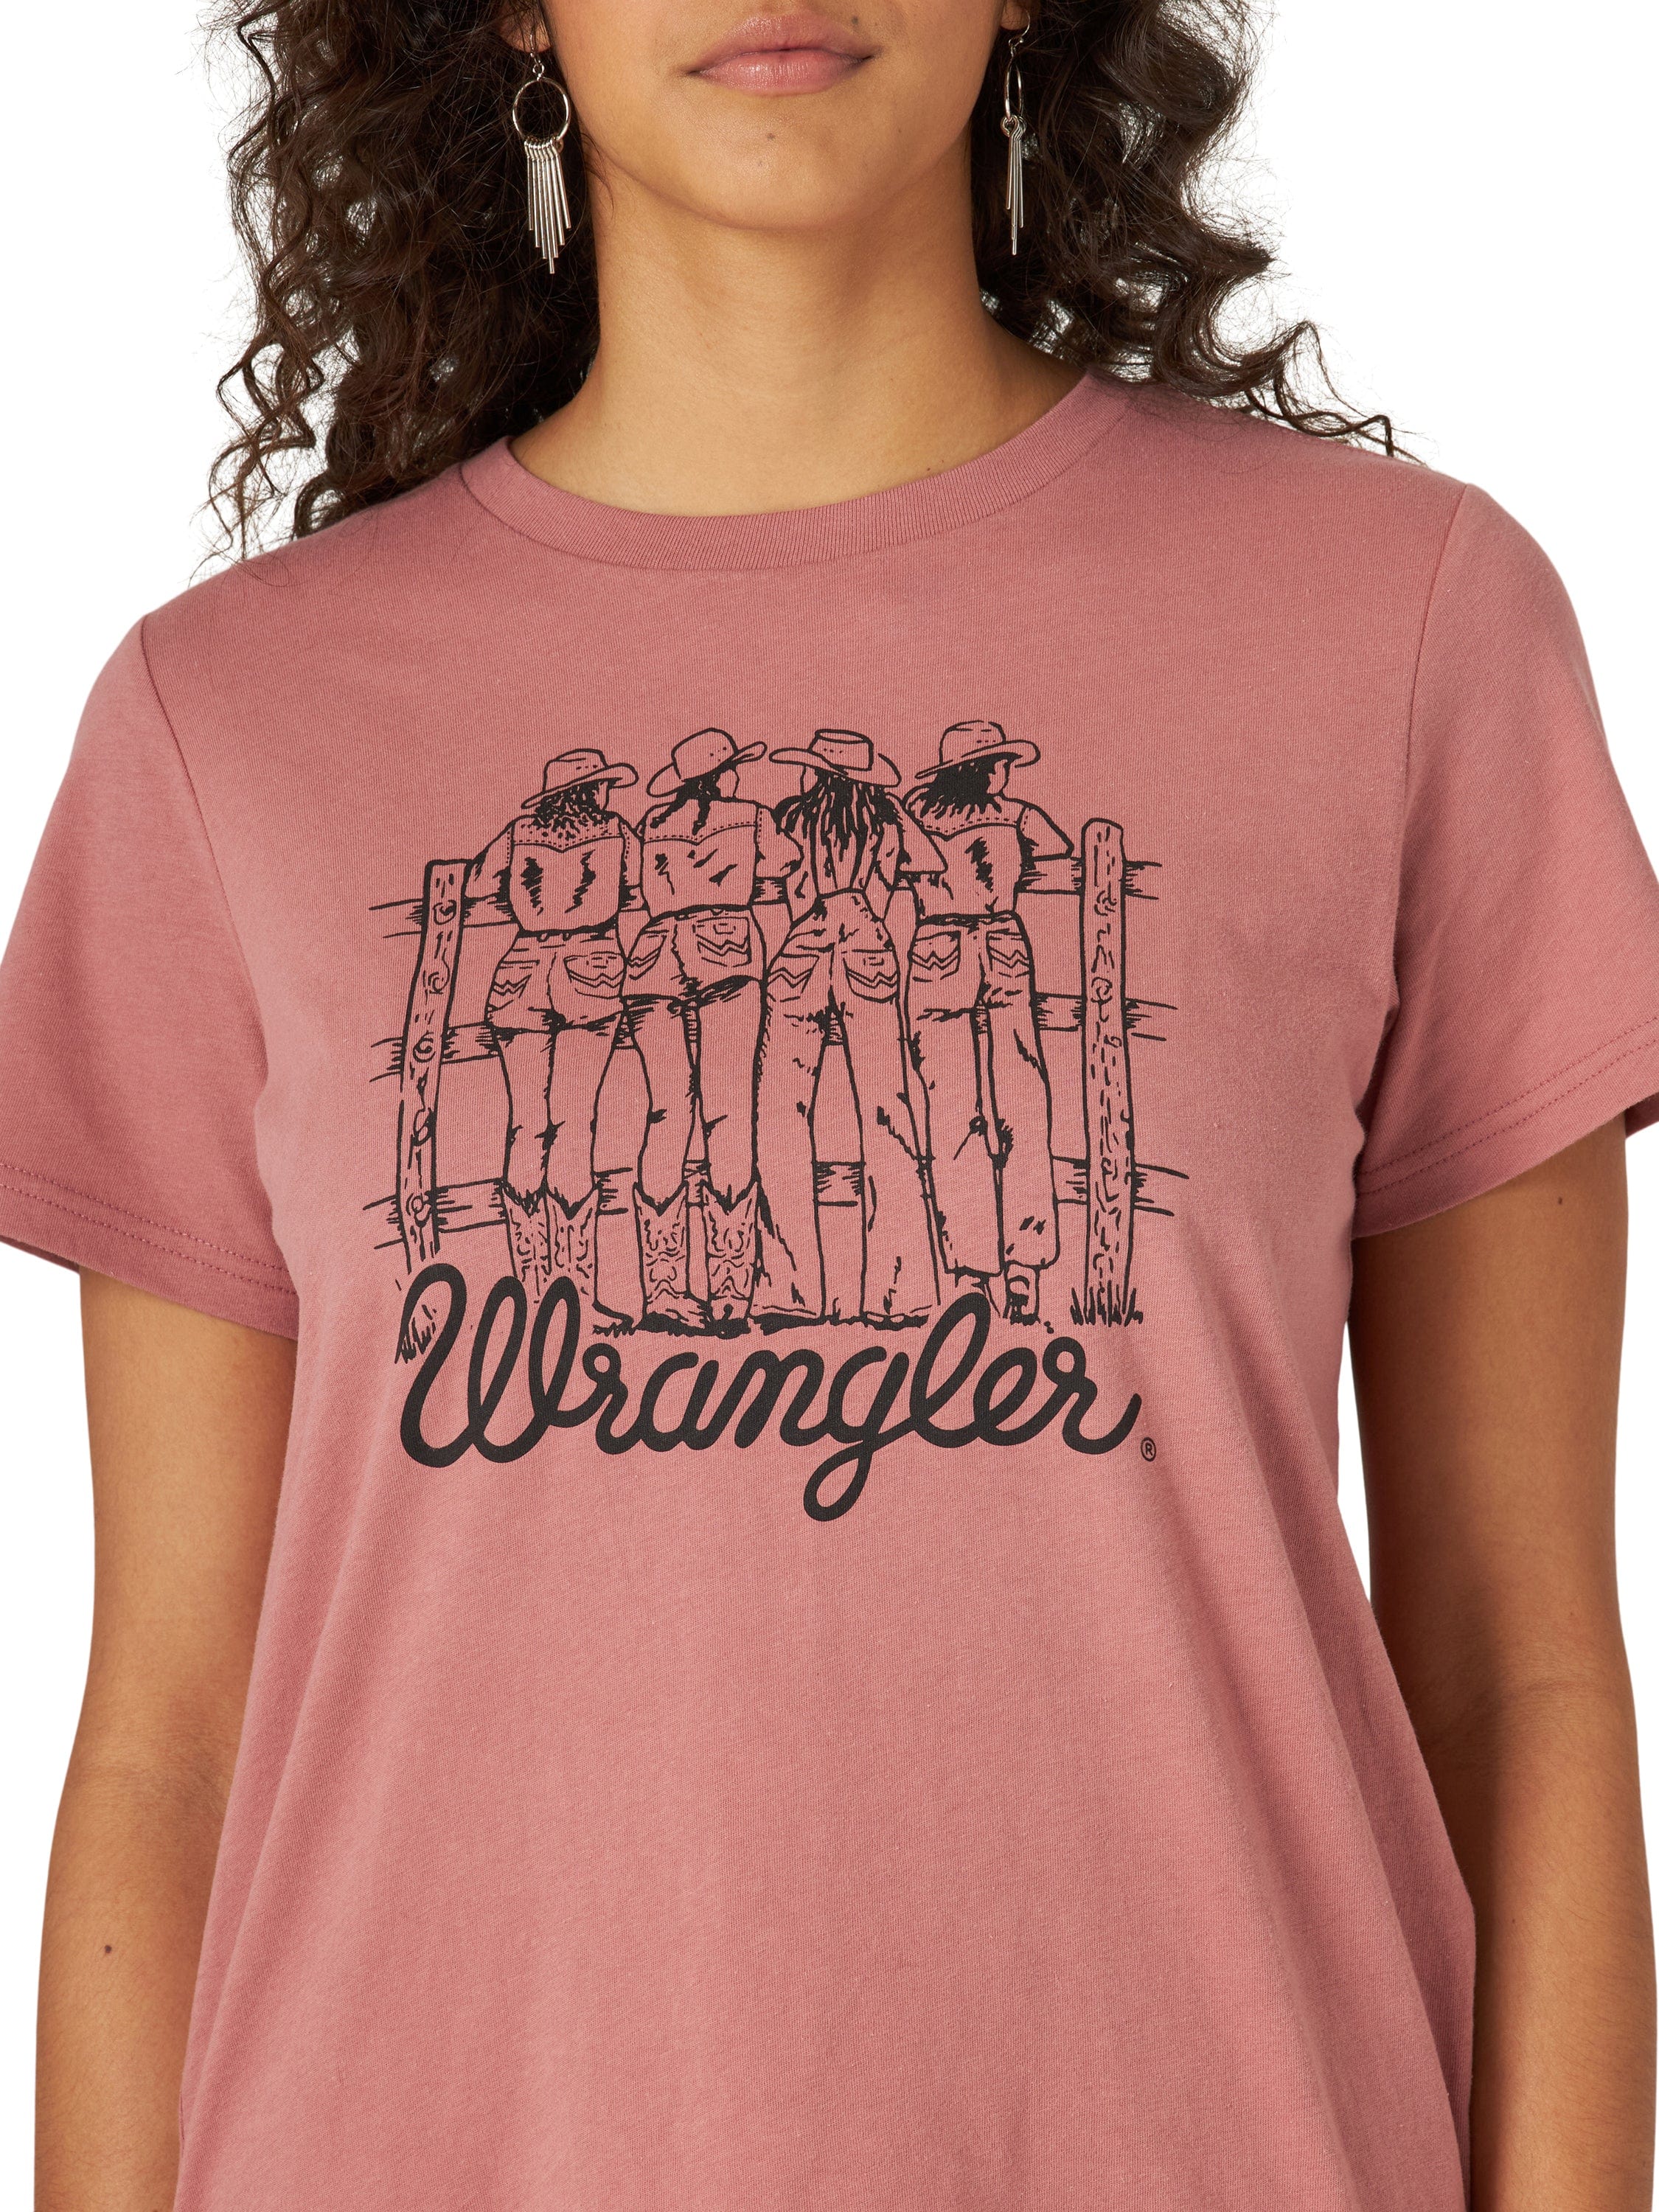 Wrangler Girls Bandana Western Shirt (112335320) Xs